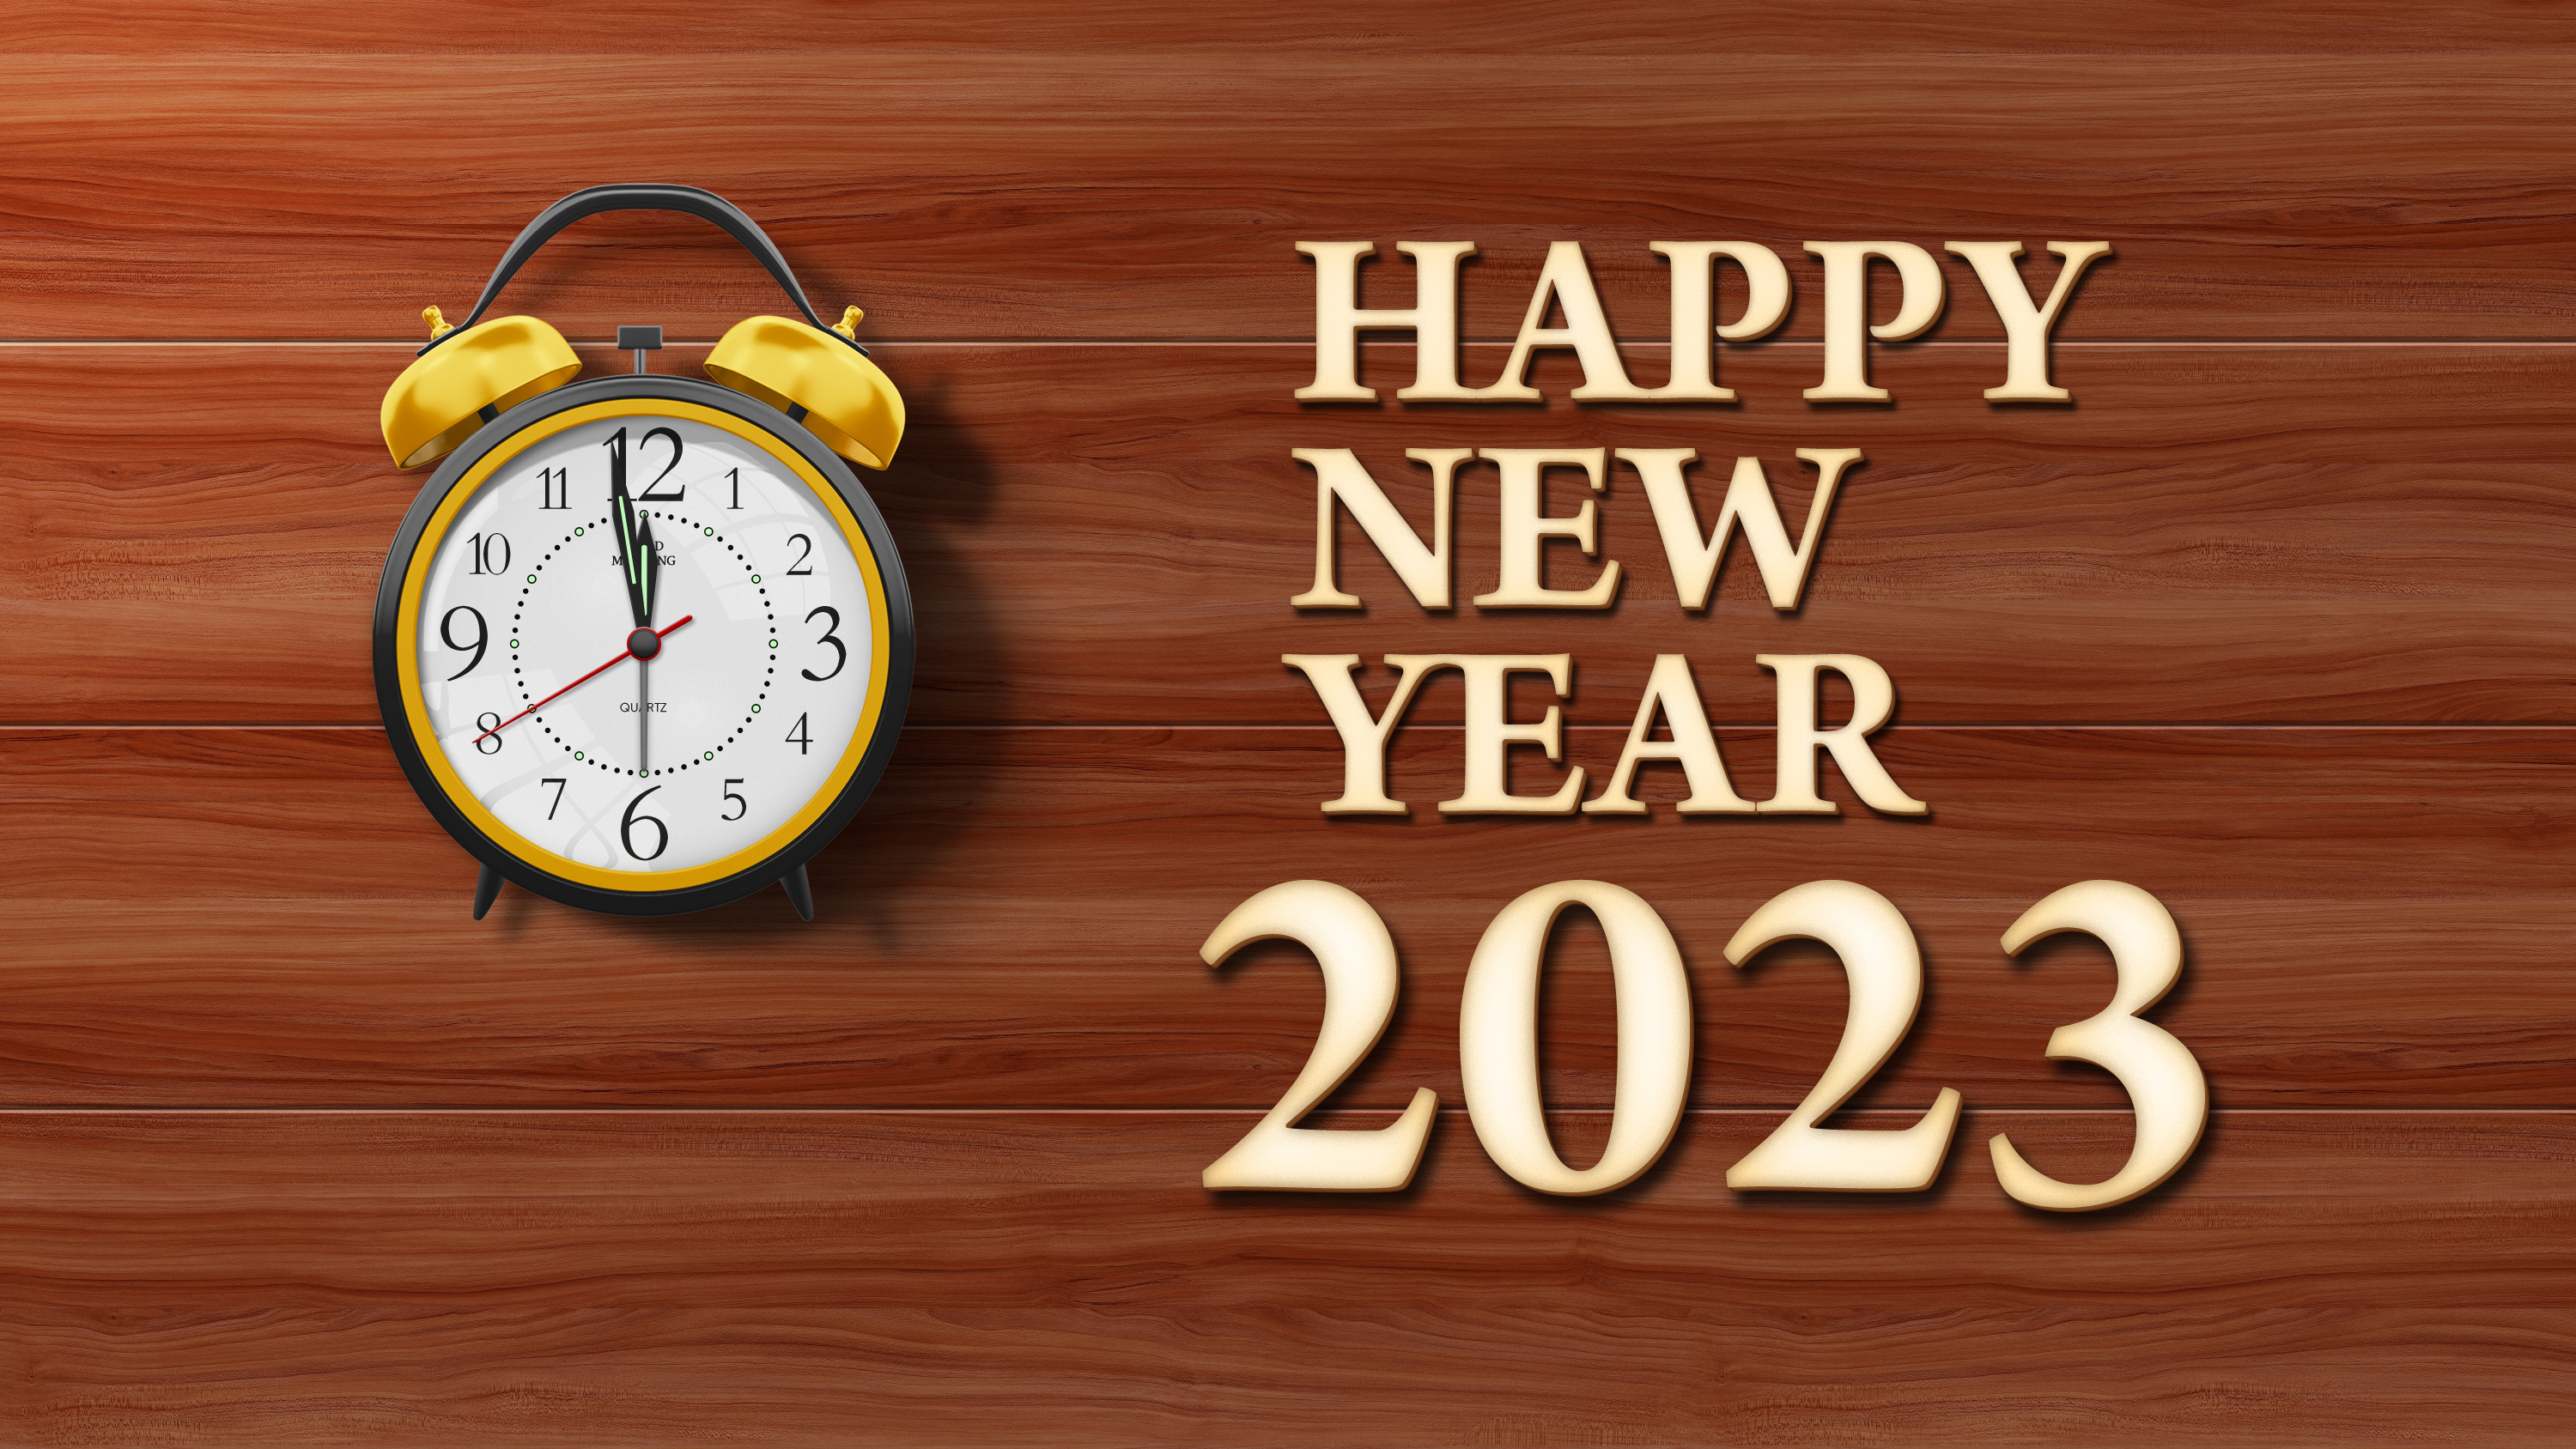 General 3000x1688 2023 (year) New Year clocks holiday digital art text